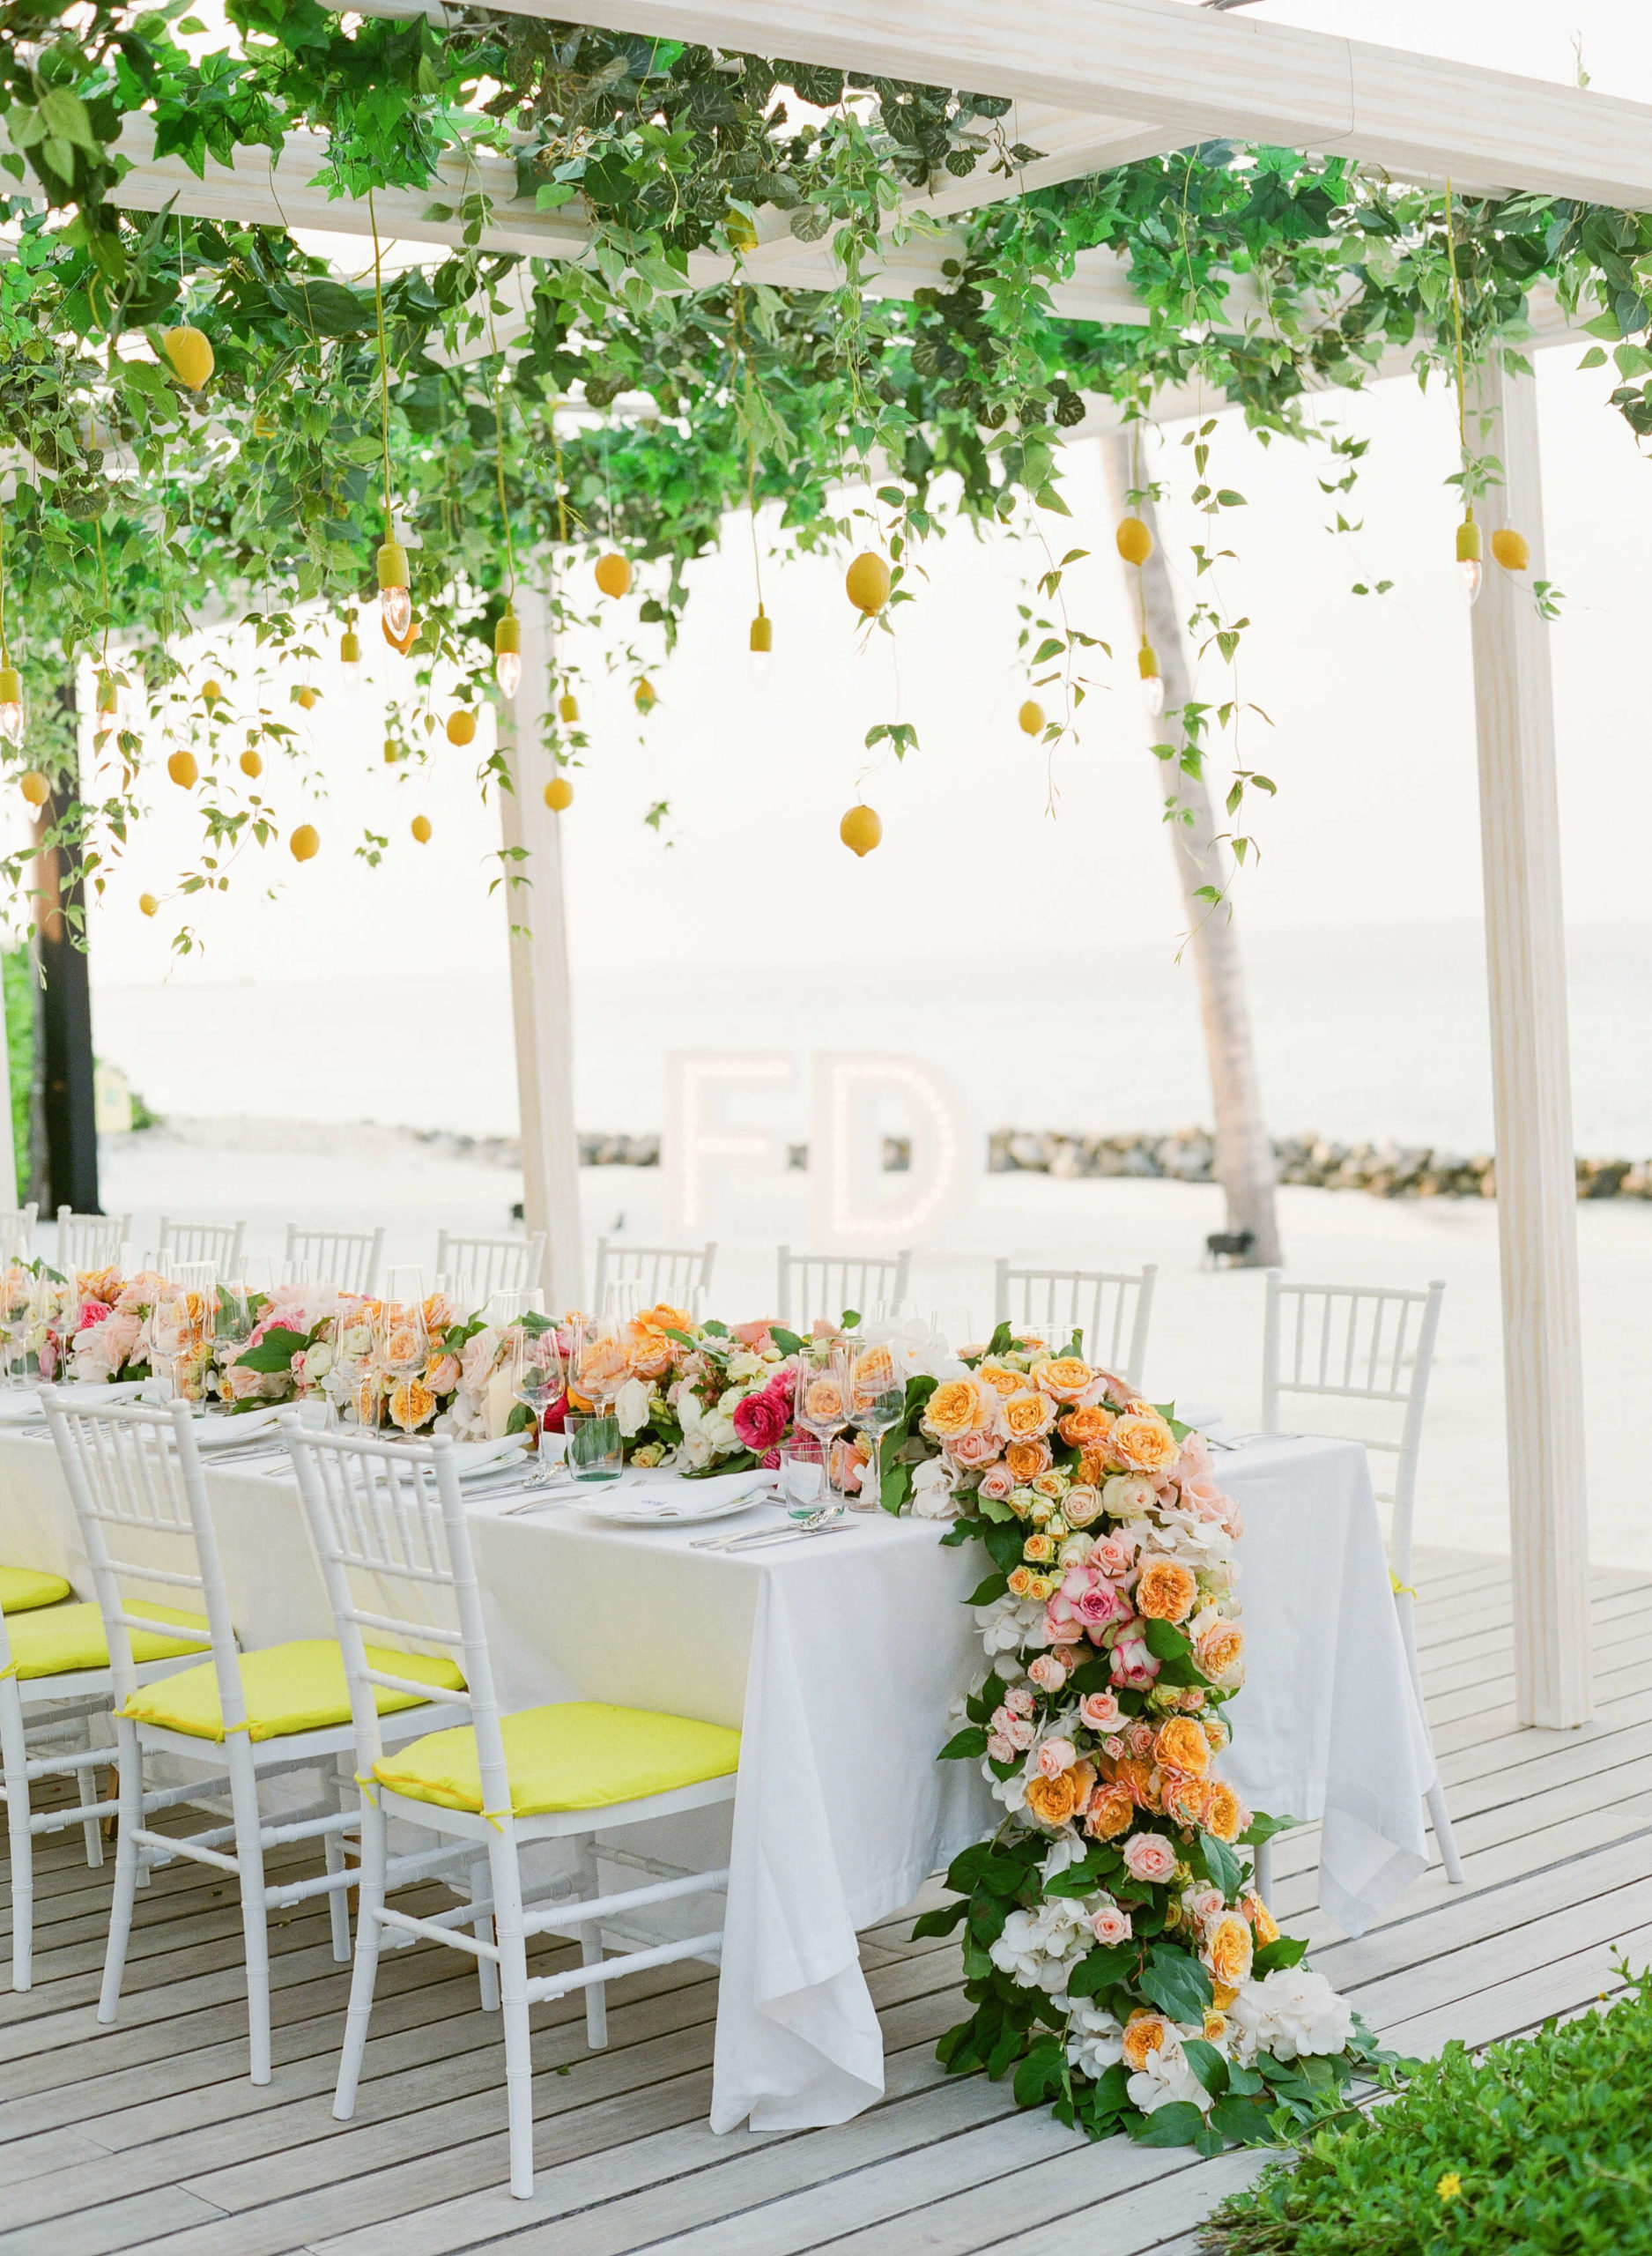 lemon-themed table decor at 100th day celebration